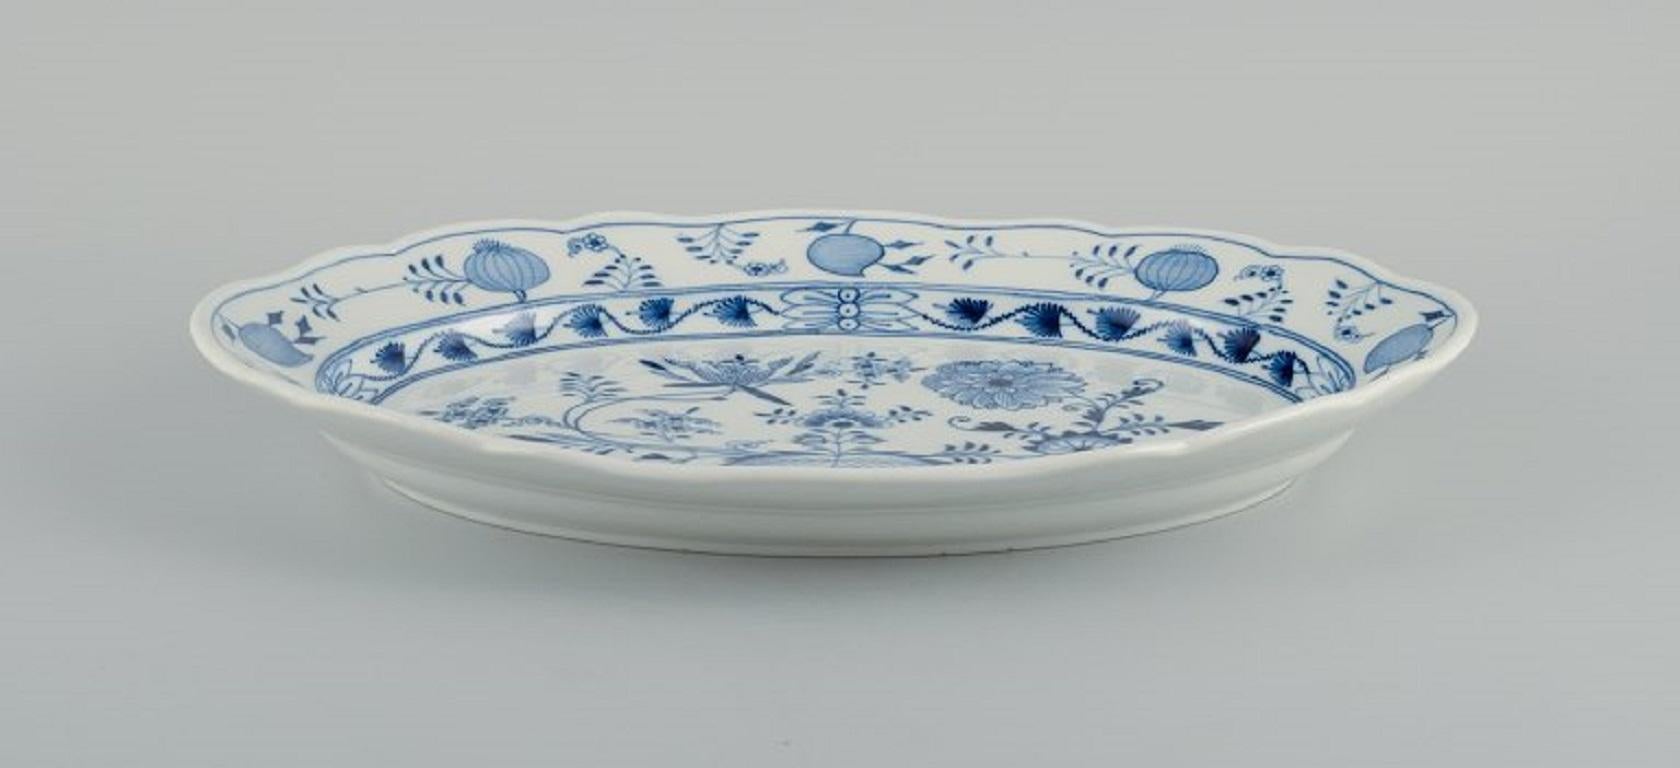 Meissen, Blaue Zwiebel ovale Schale in Porzellan.
um 1900.
Erste Fabrikqualität.
Perfekter Zustand.
Markiert.
Abmessungen: L 41,5 x T 30,5 x H 6,0 cm.